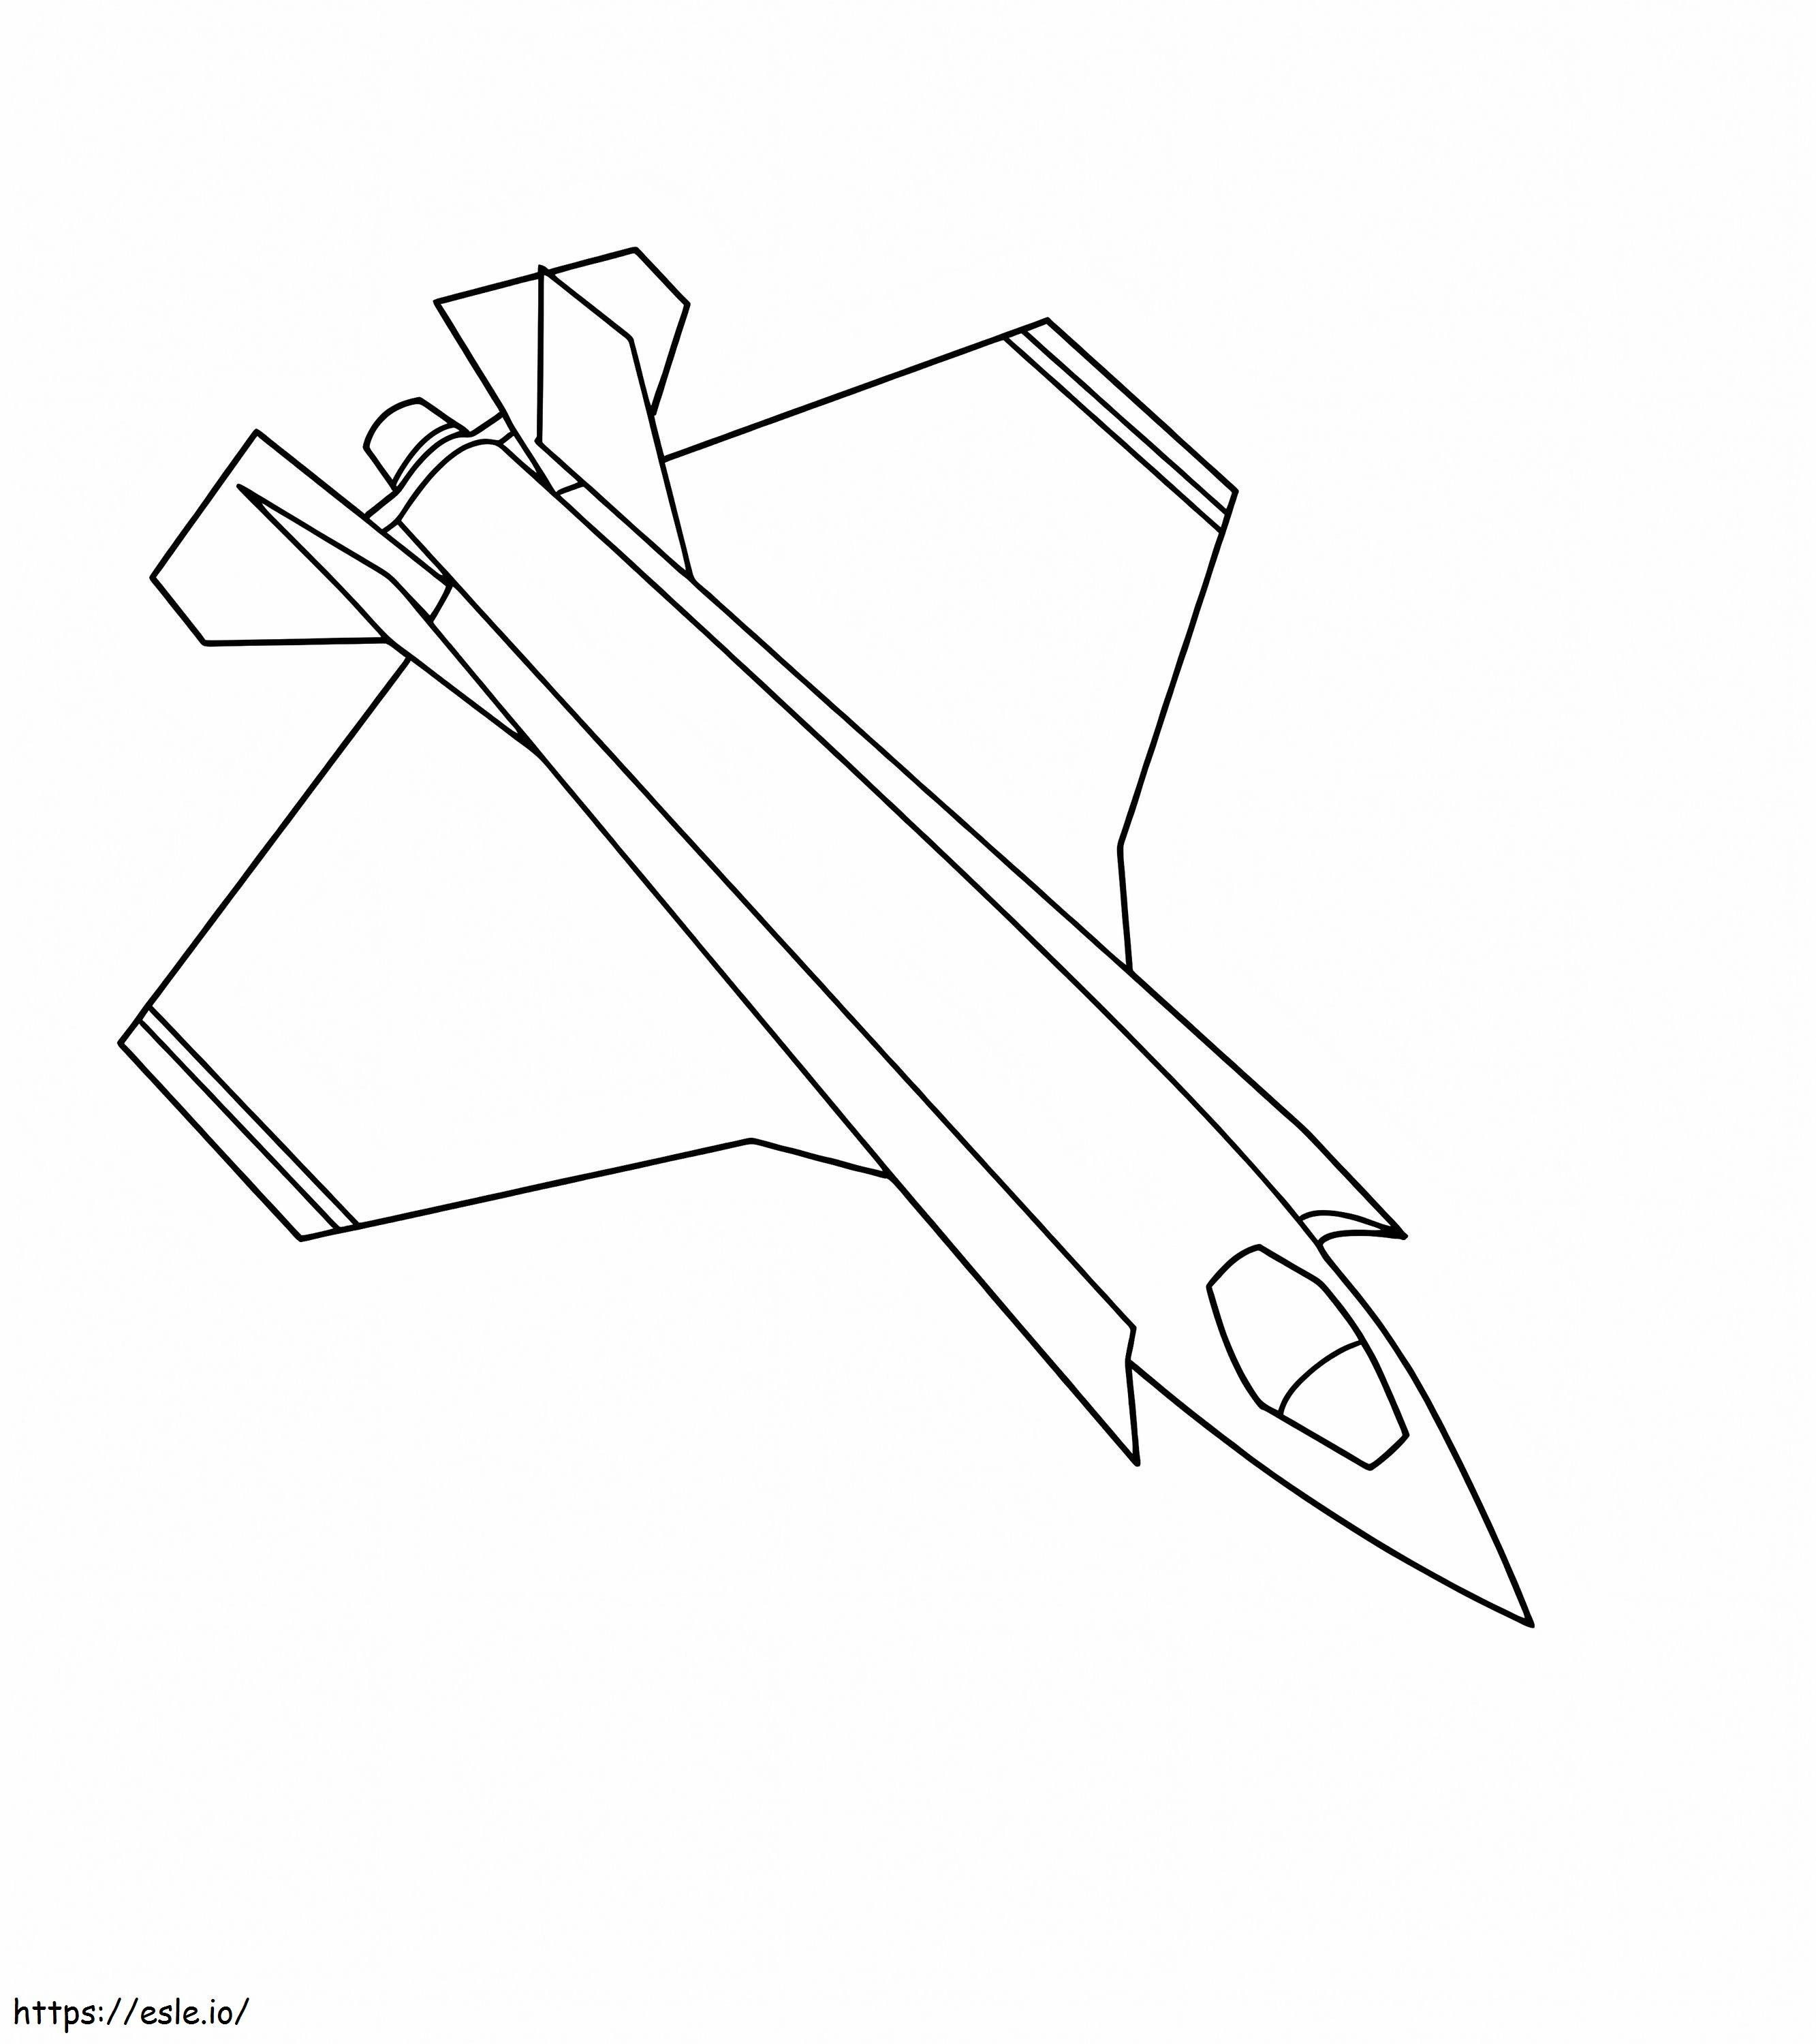 Coloriage Avions faciles à imprimer dessin